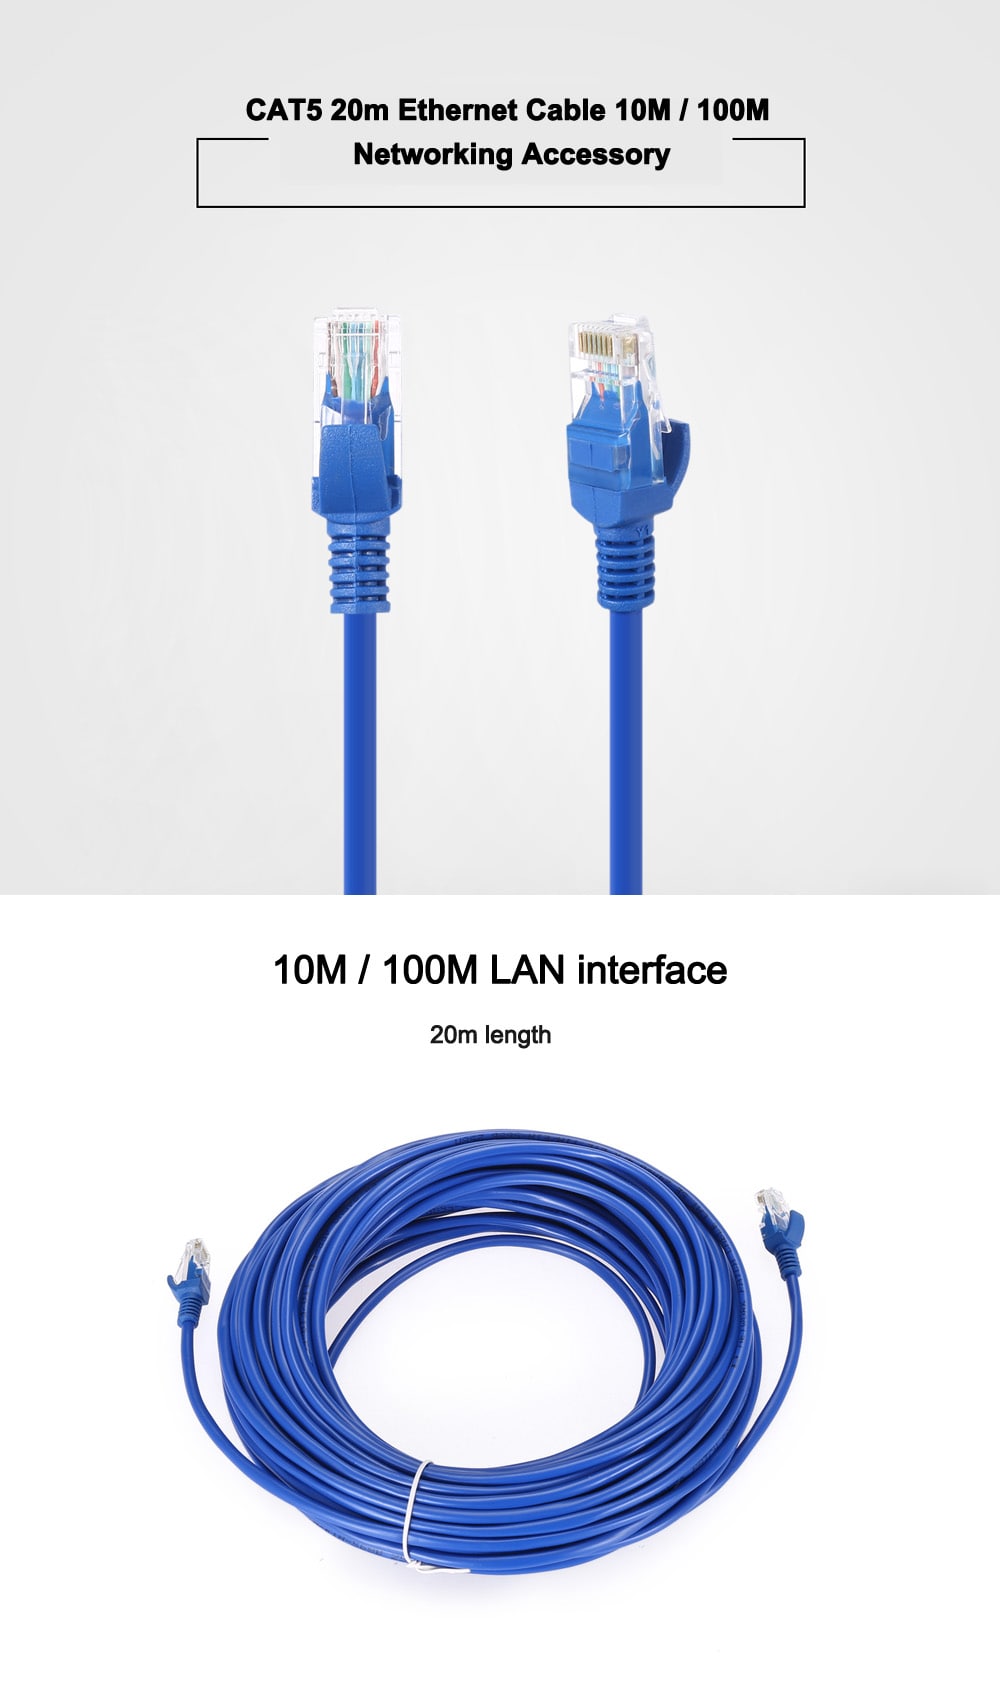 CAT5 20m Category 10M / 100M Ethernet Cable- Blue